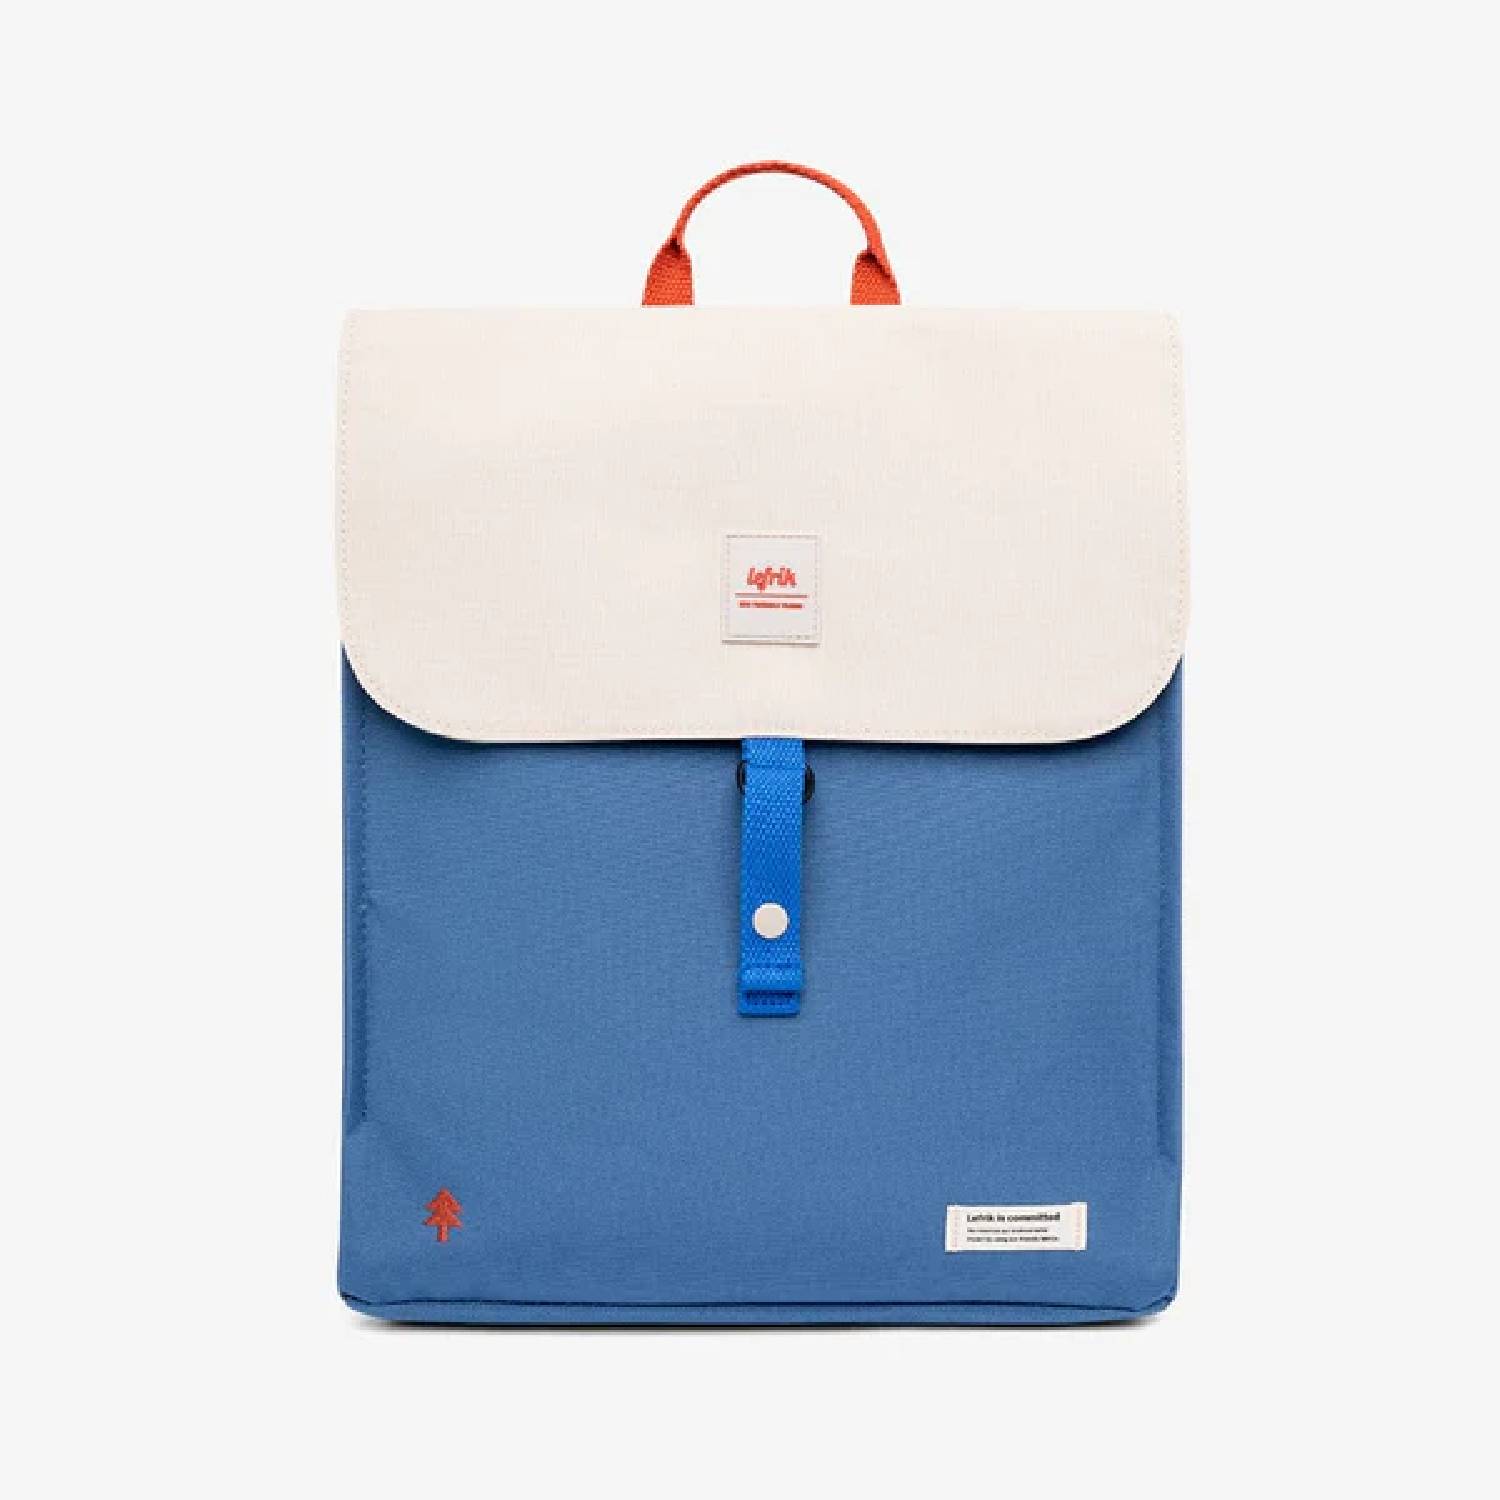 Lefrik handy mini backpack in blue and white